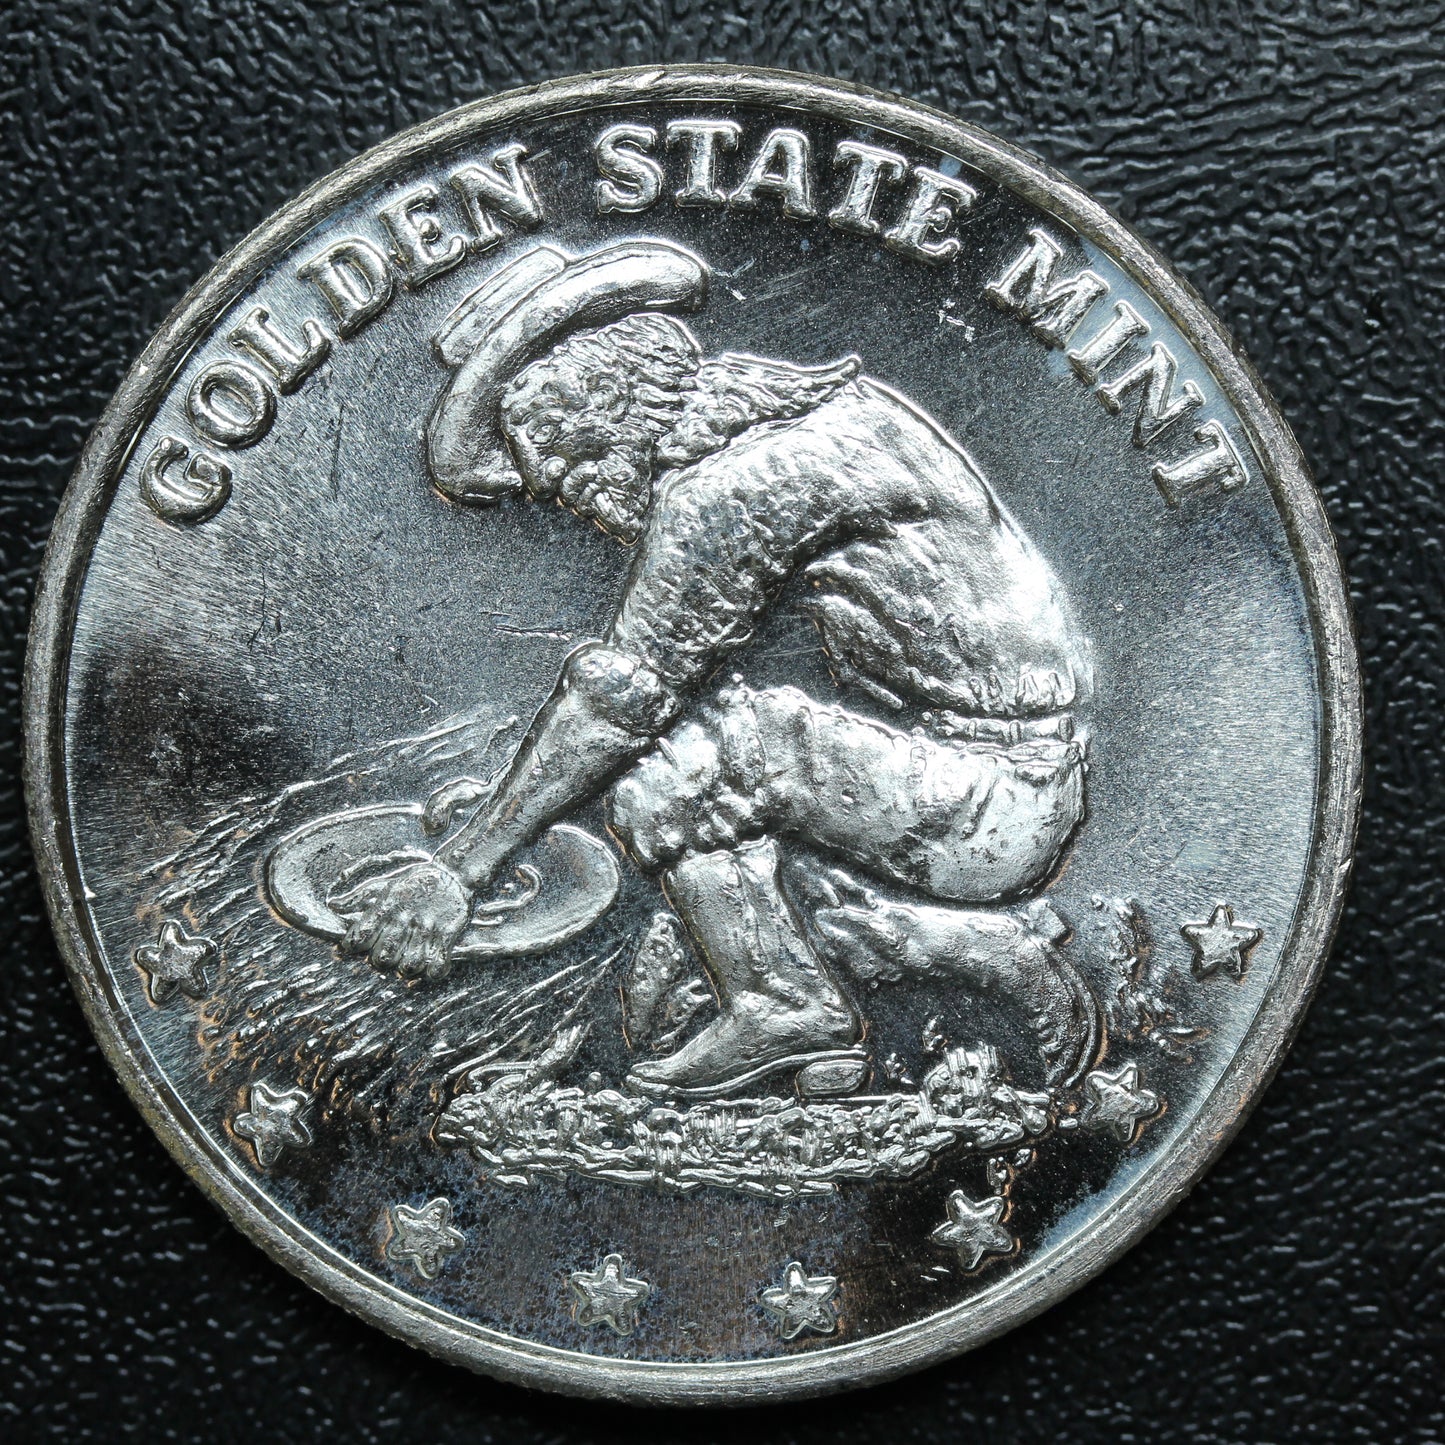 1 oz .999 Fine Silver - Golden State Mint (GSM) - Prospector